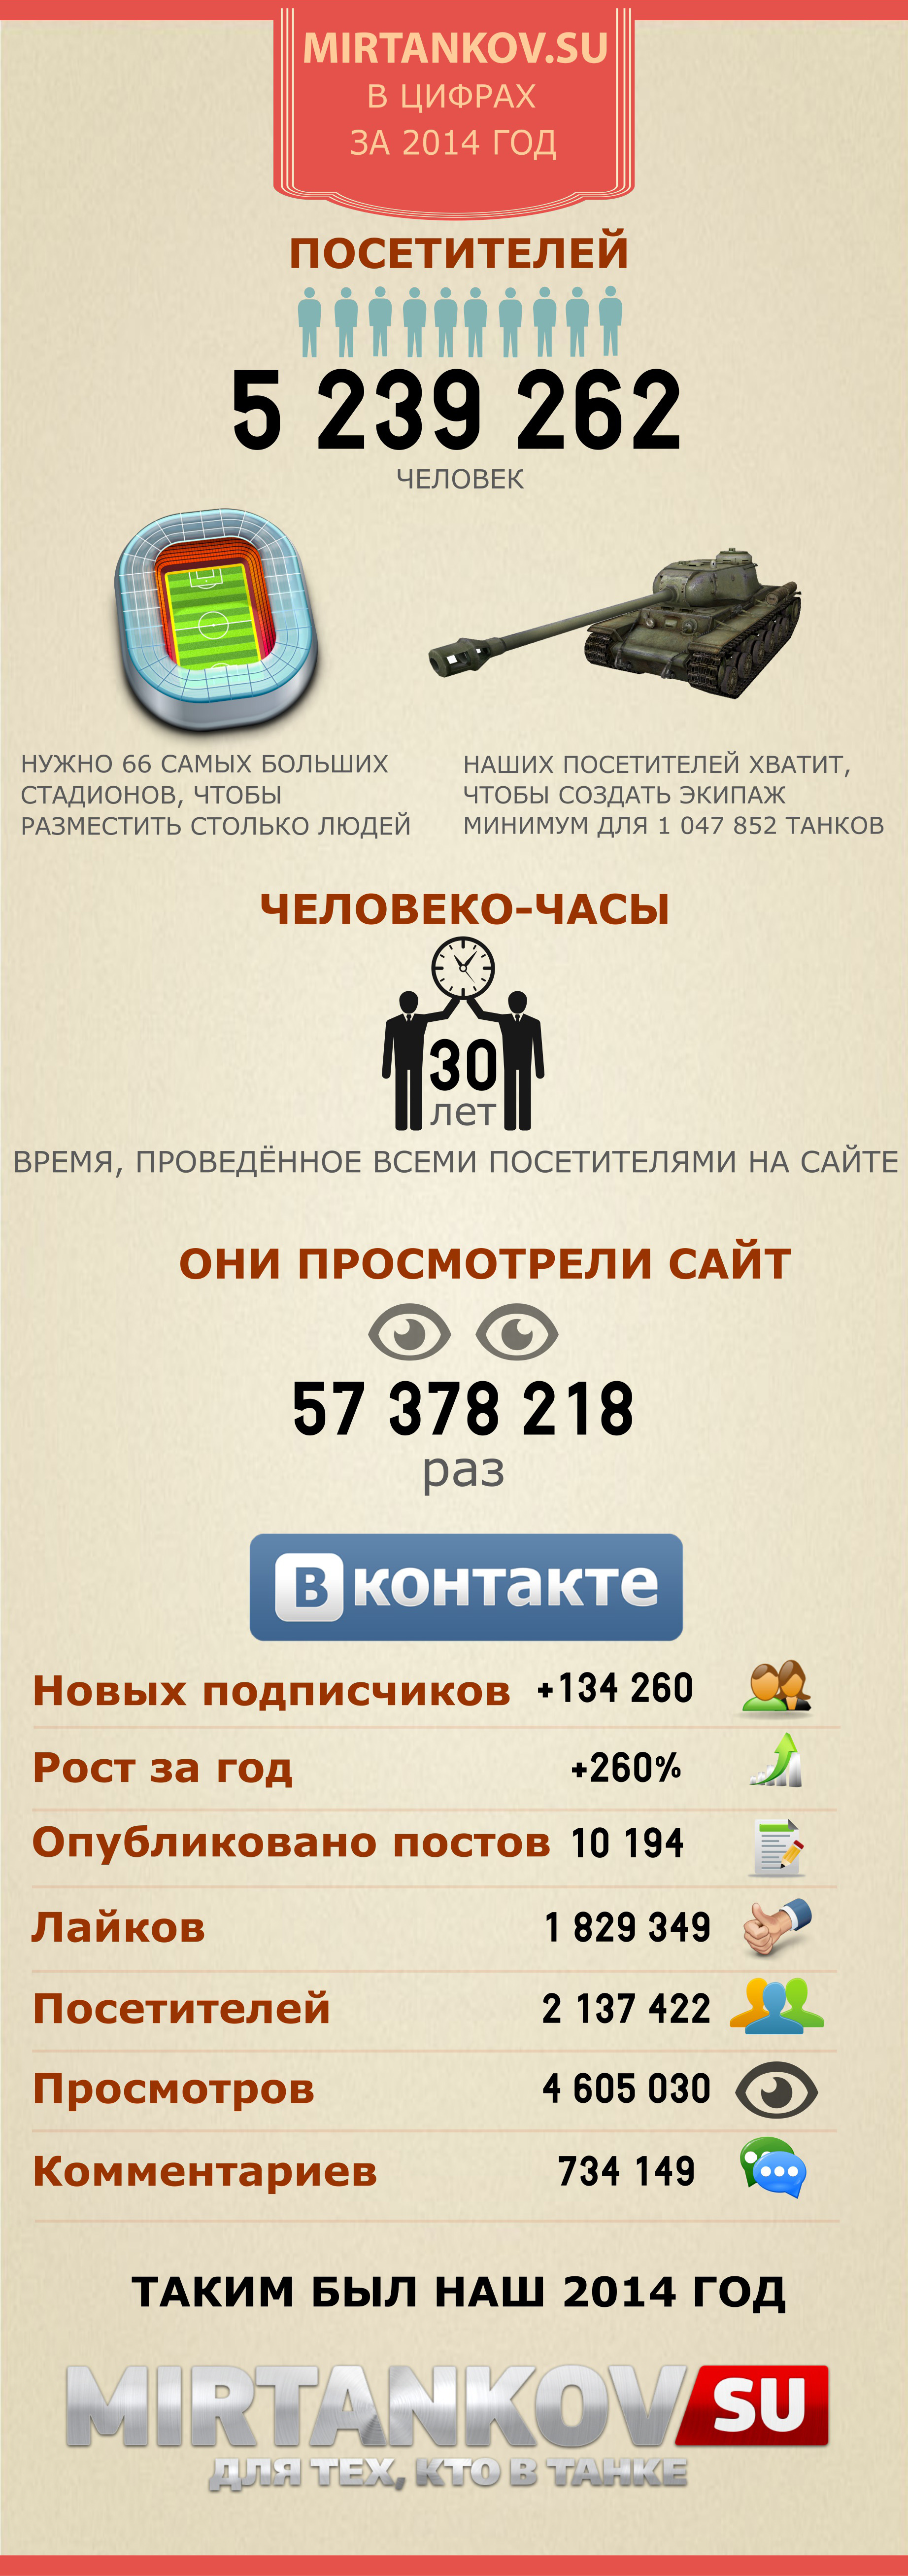 mirtankov.su в цифрах за 2014 год инфографика